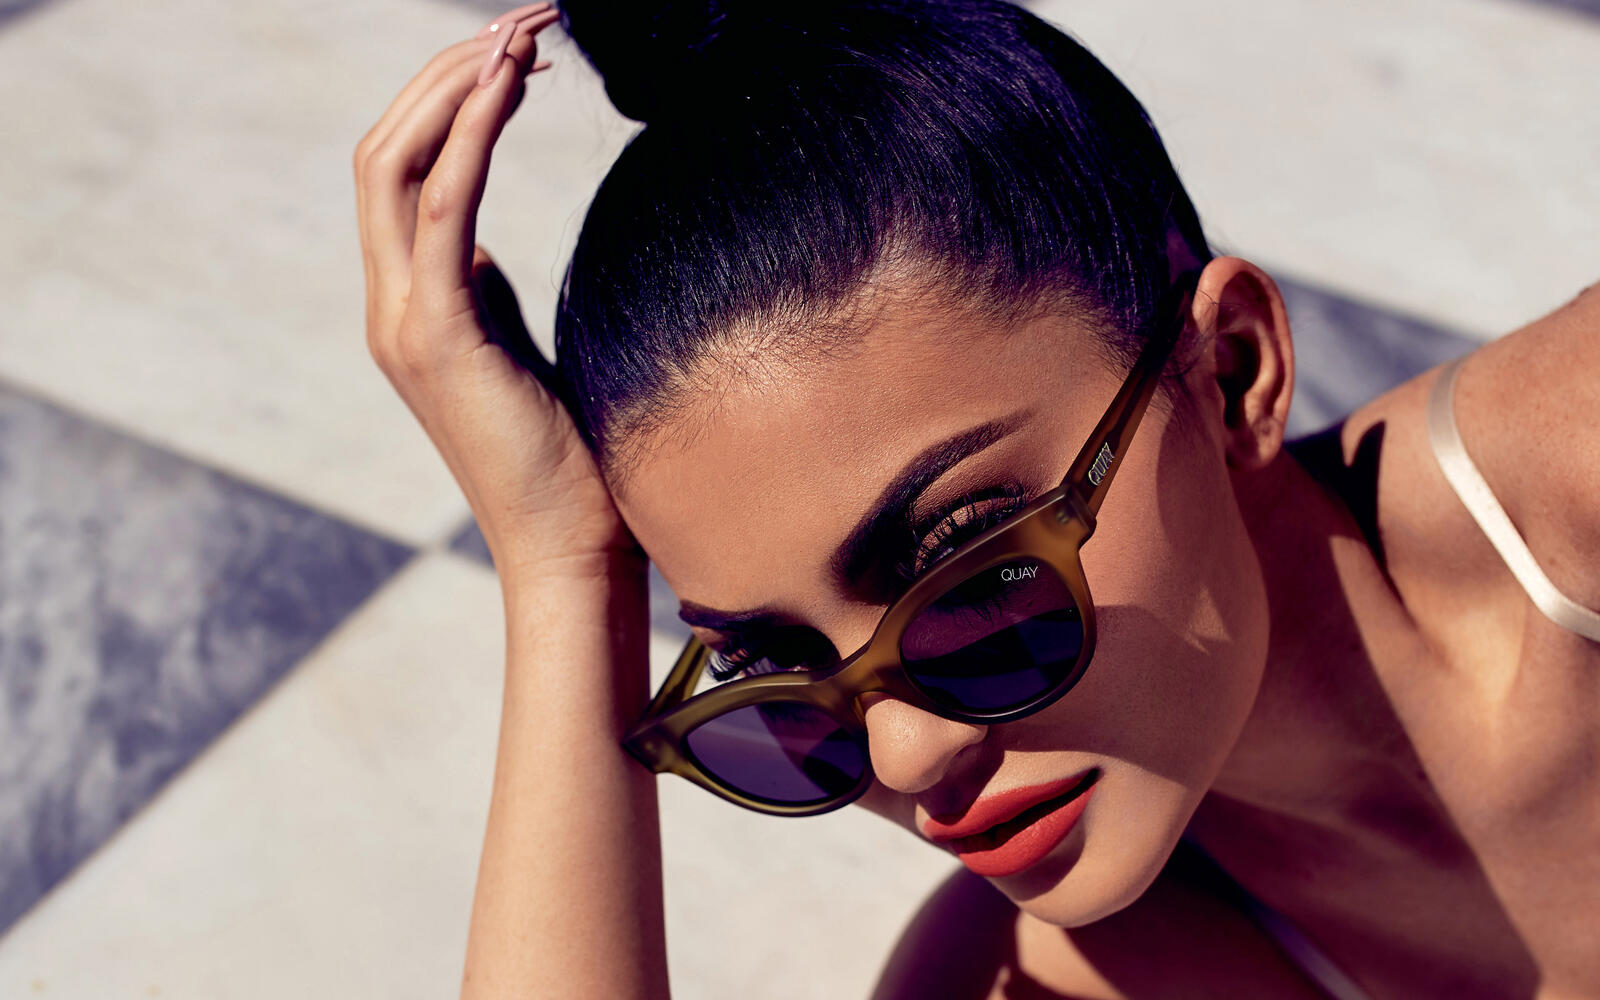 Wallpapers celebrities Kylie Jenner sunglasses on the desktop